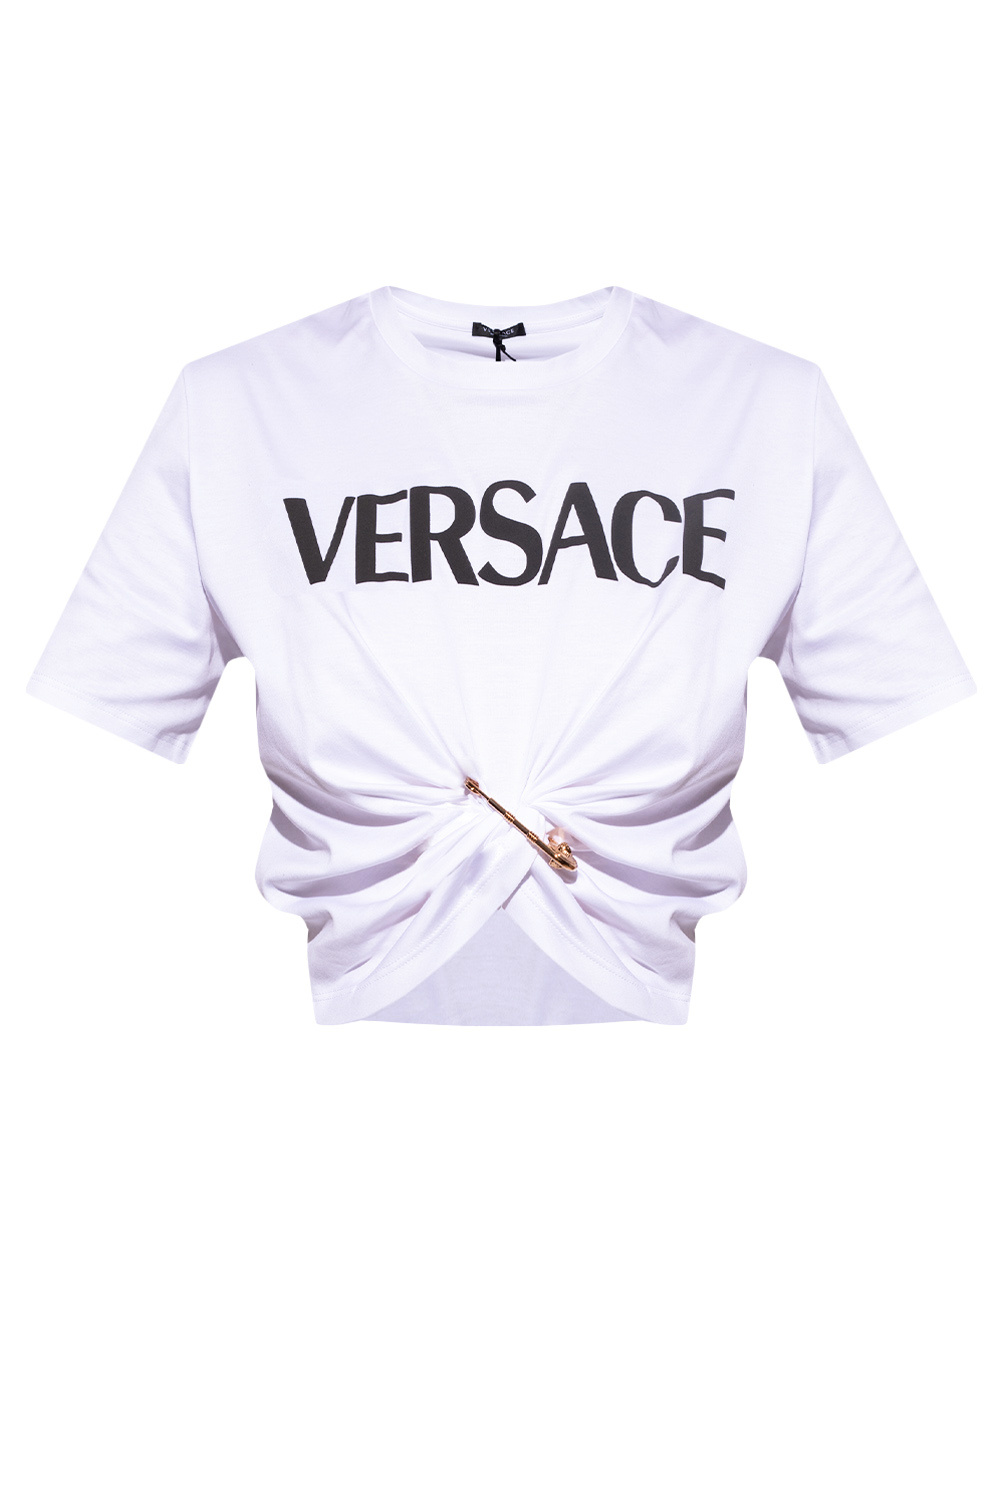 IetpShops Venezuela aus zip Versace dress shirt reiner Sweatshirt Baumwolle - - - Michael St midi